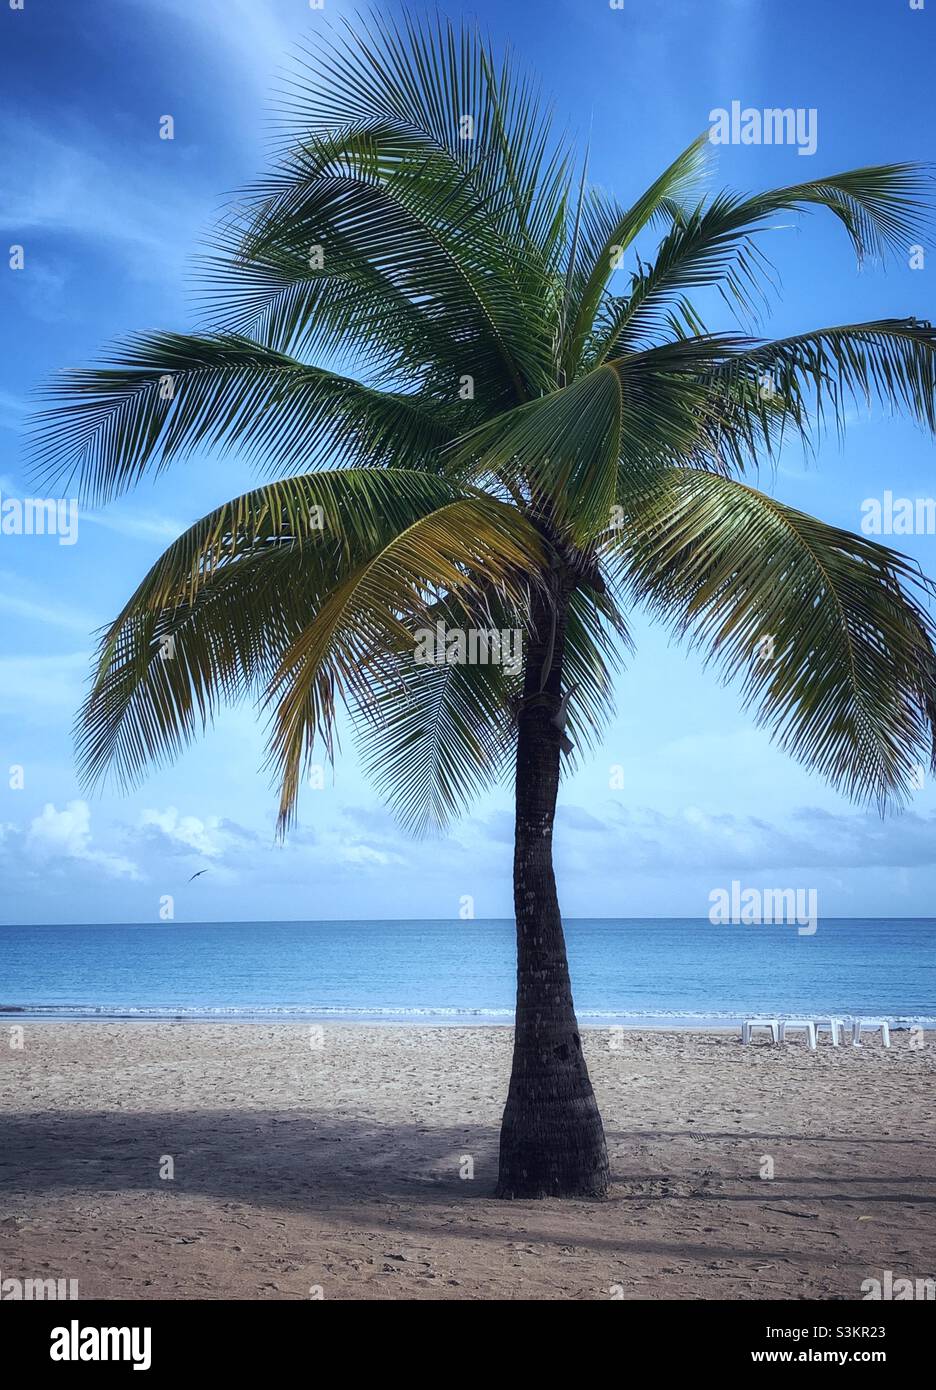 A palm tree in the beach, Isla verde, Puerto Rico. Stock Photo